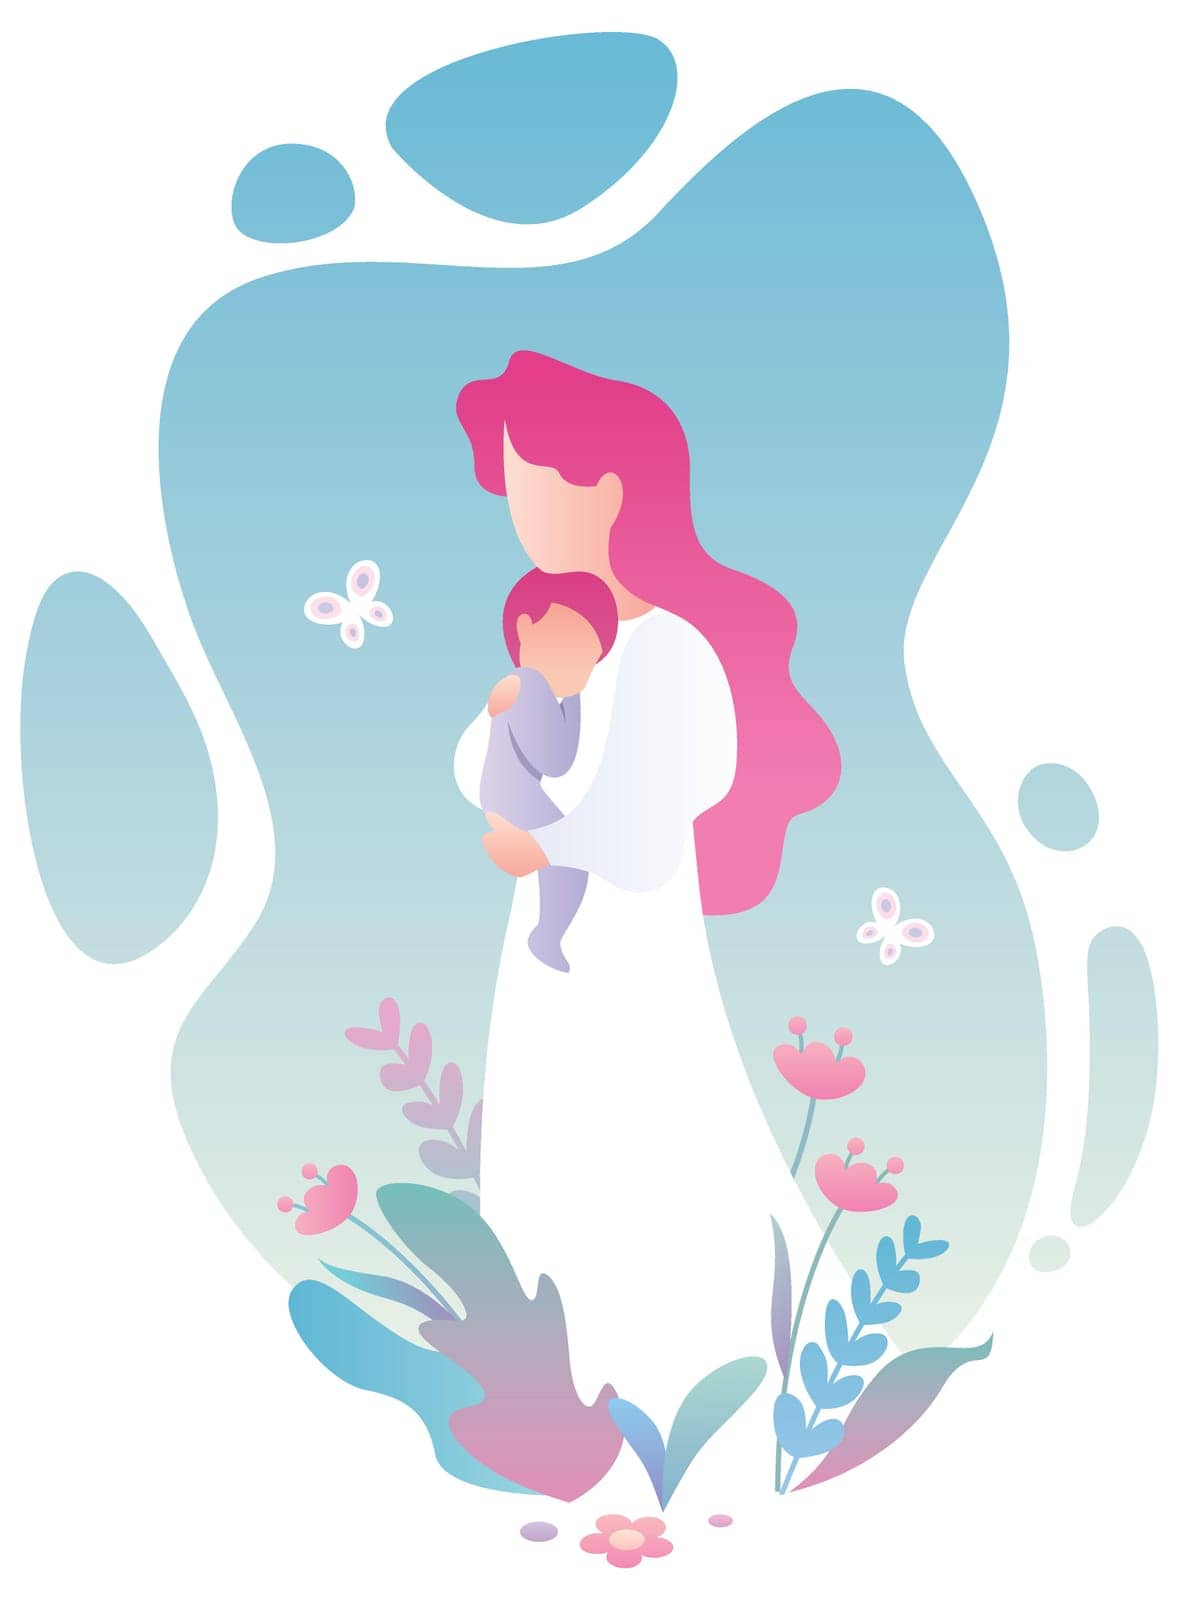 Flat design illustration of mother and child.